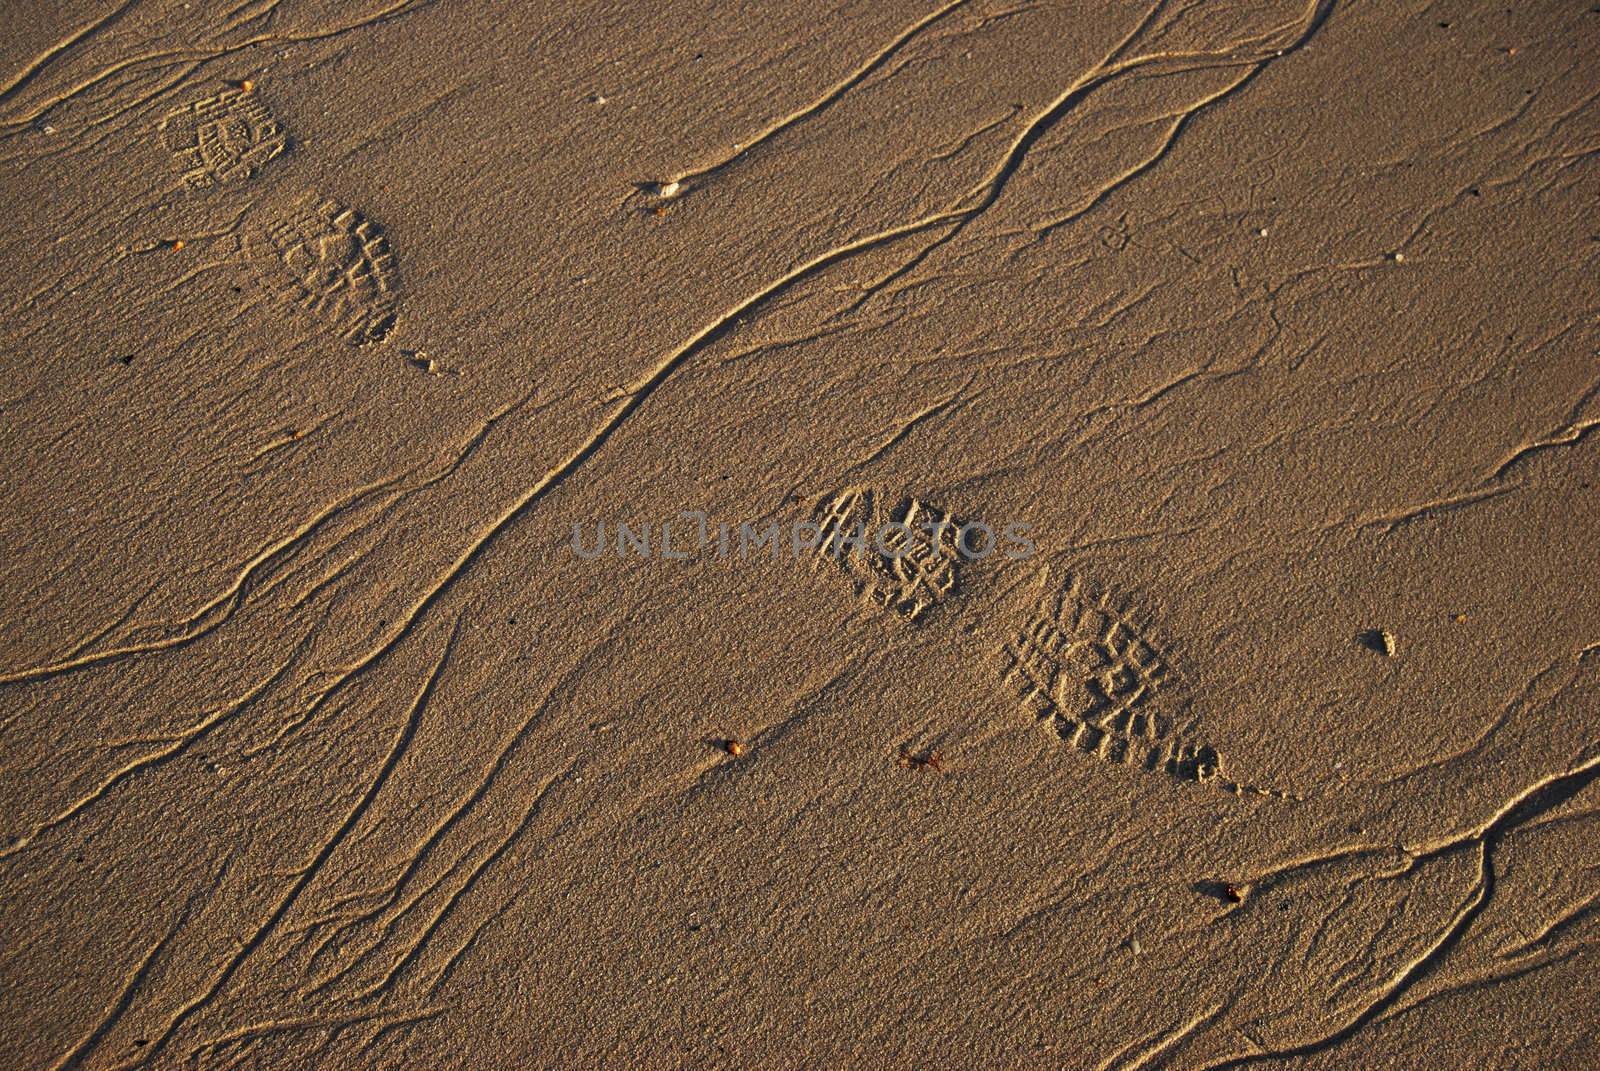 footprints in the sand by Jule_Berlin